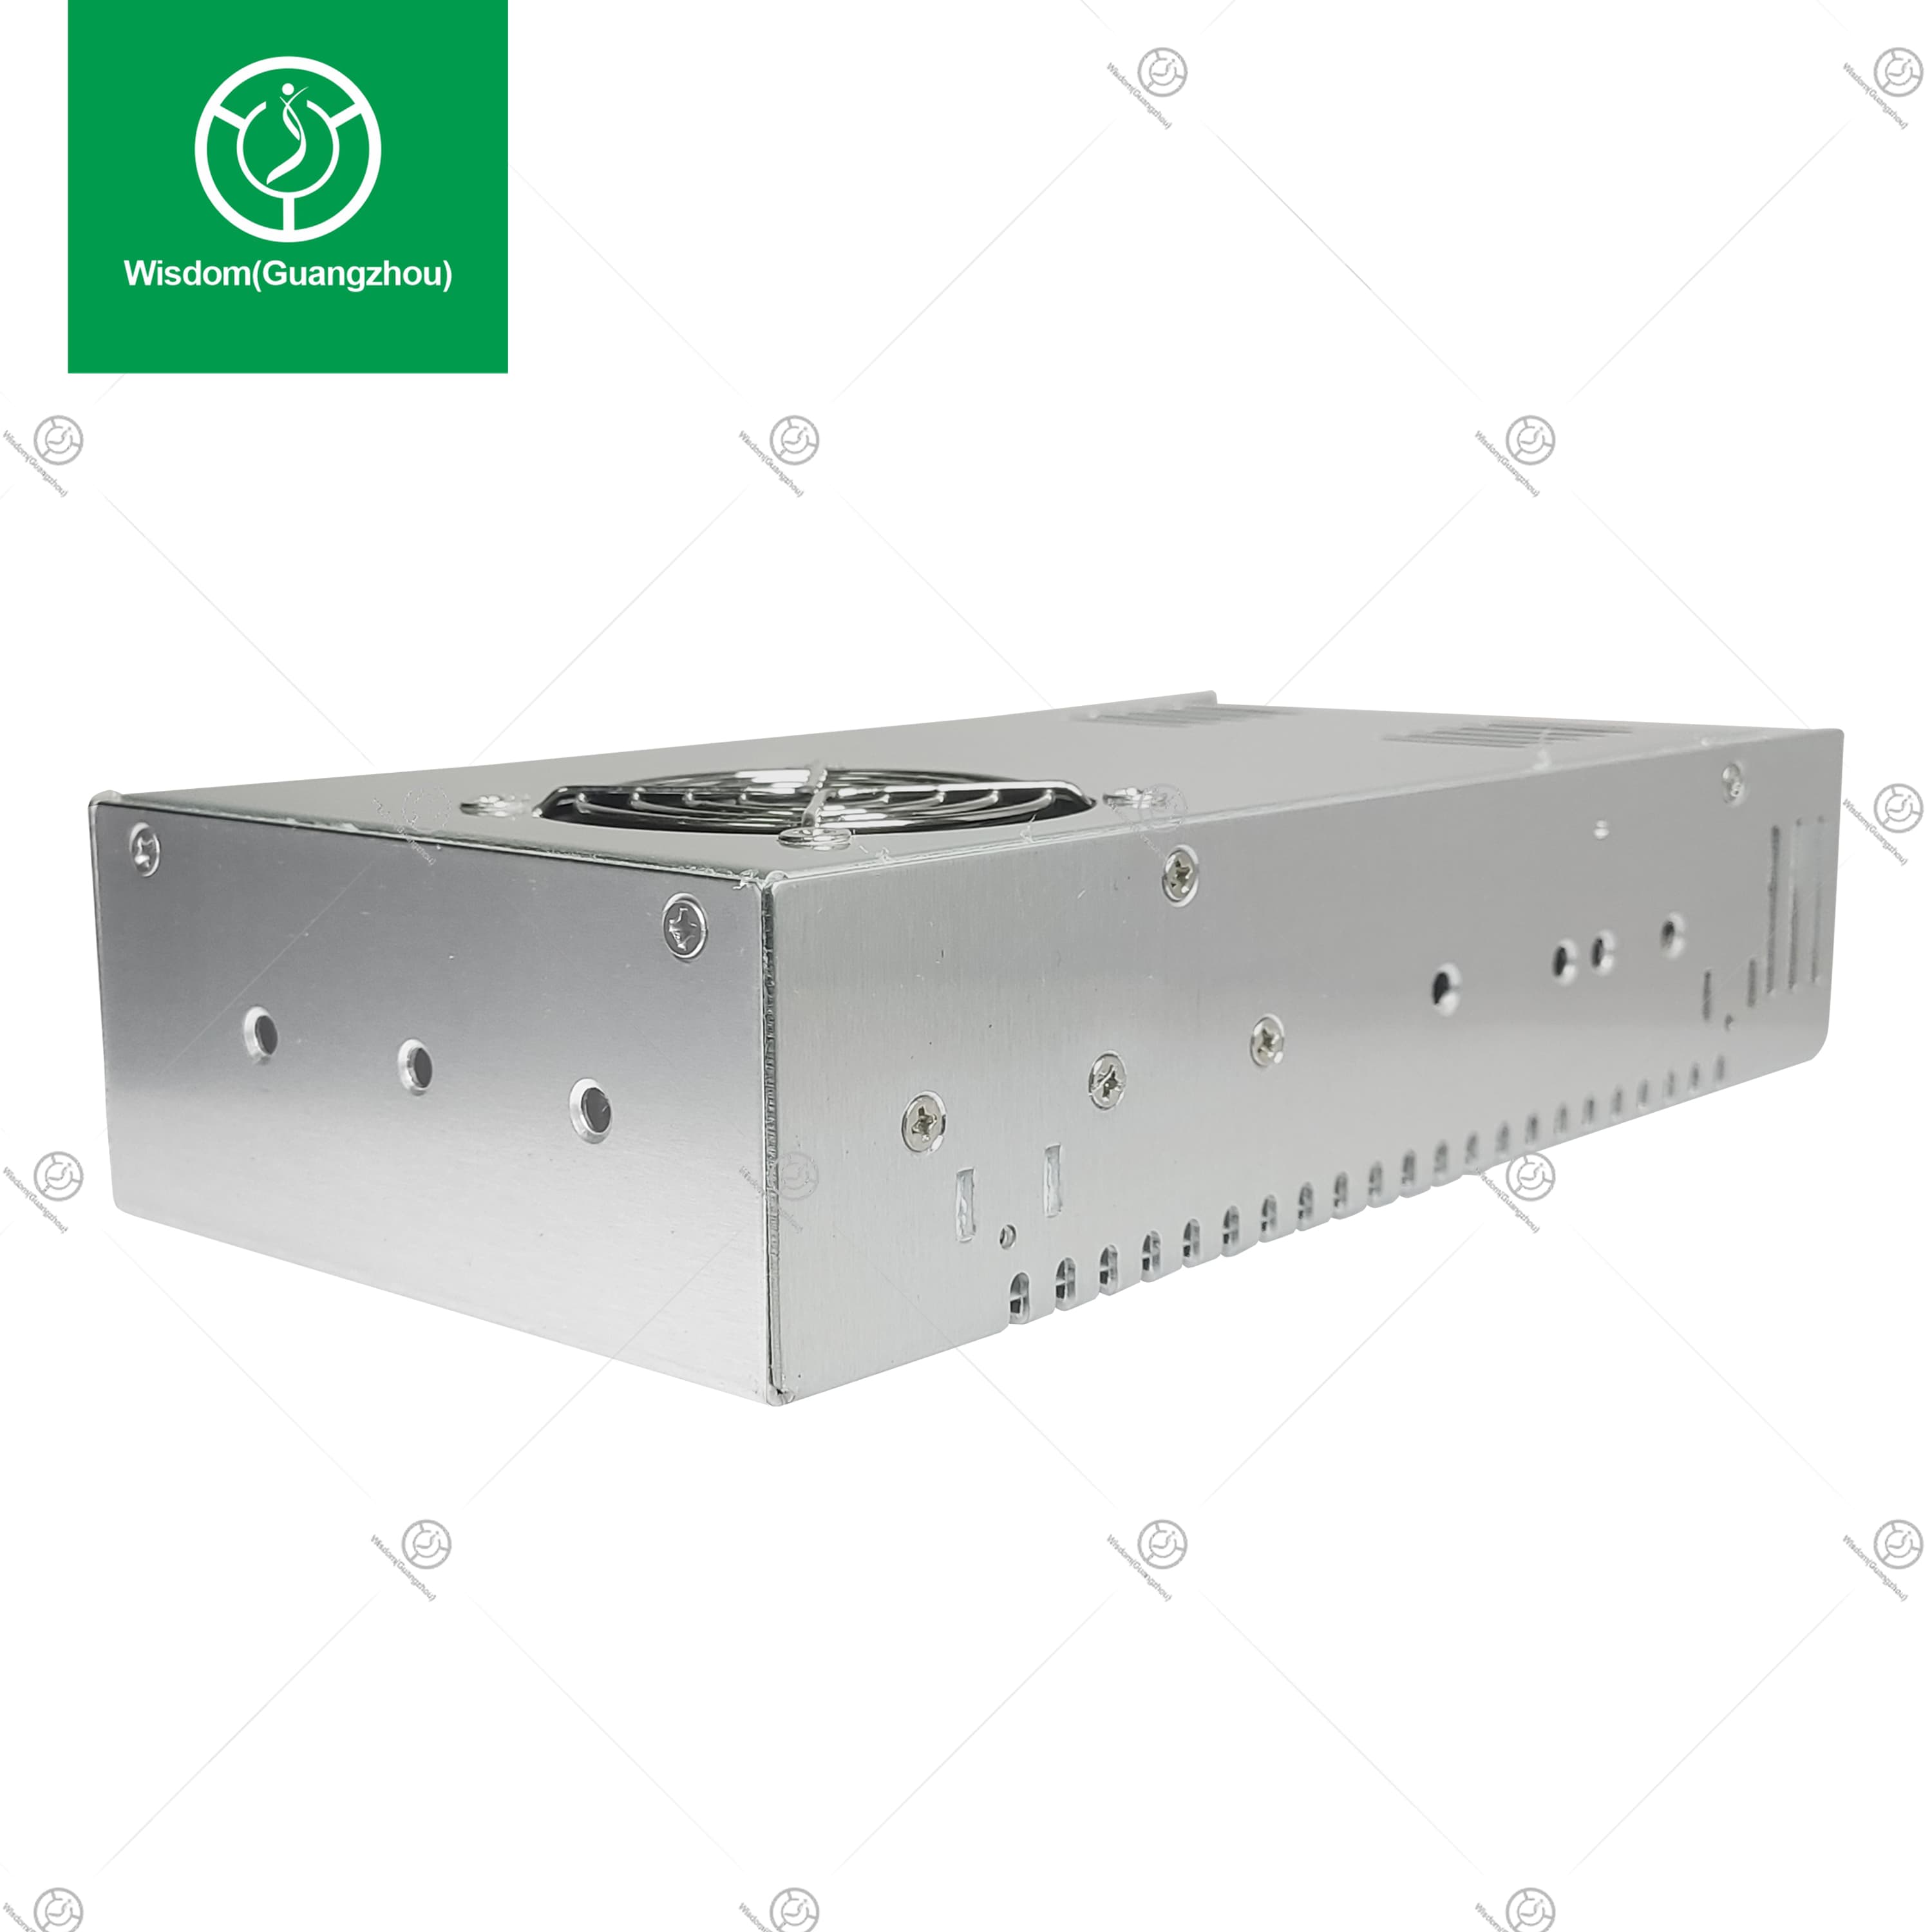 5MHz RF Power Supply (Voltage adjustable)